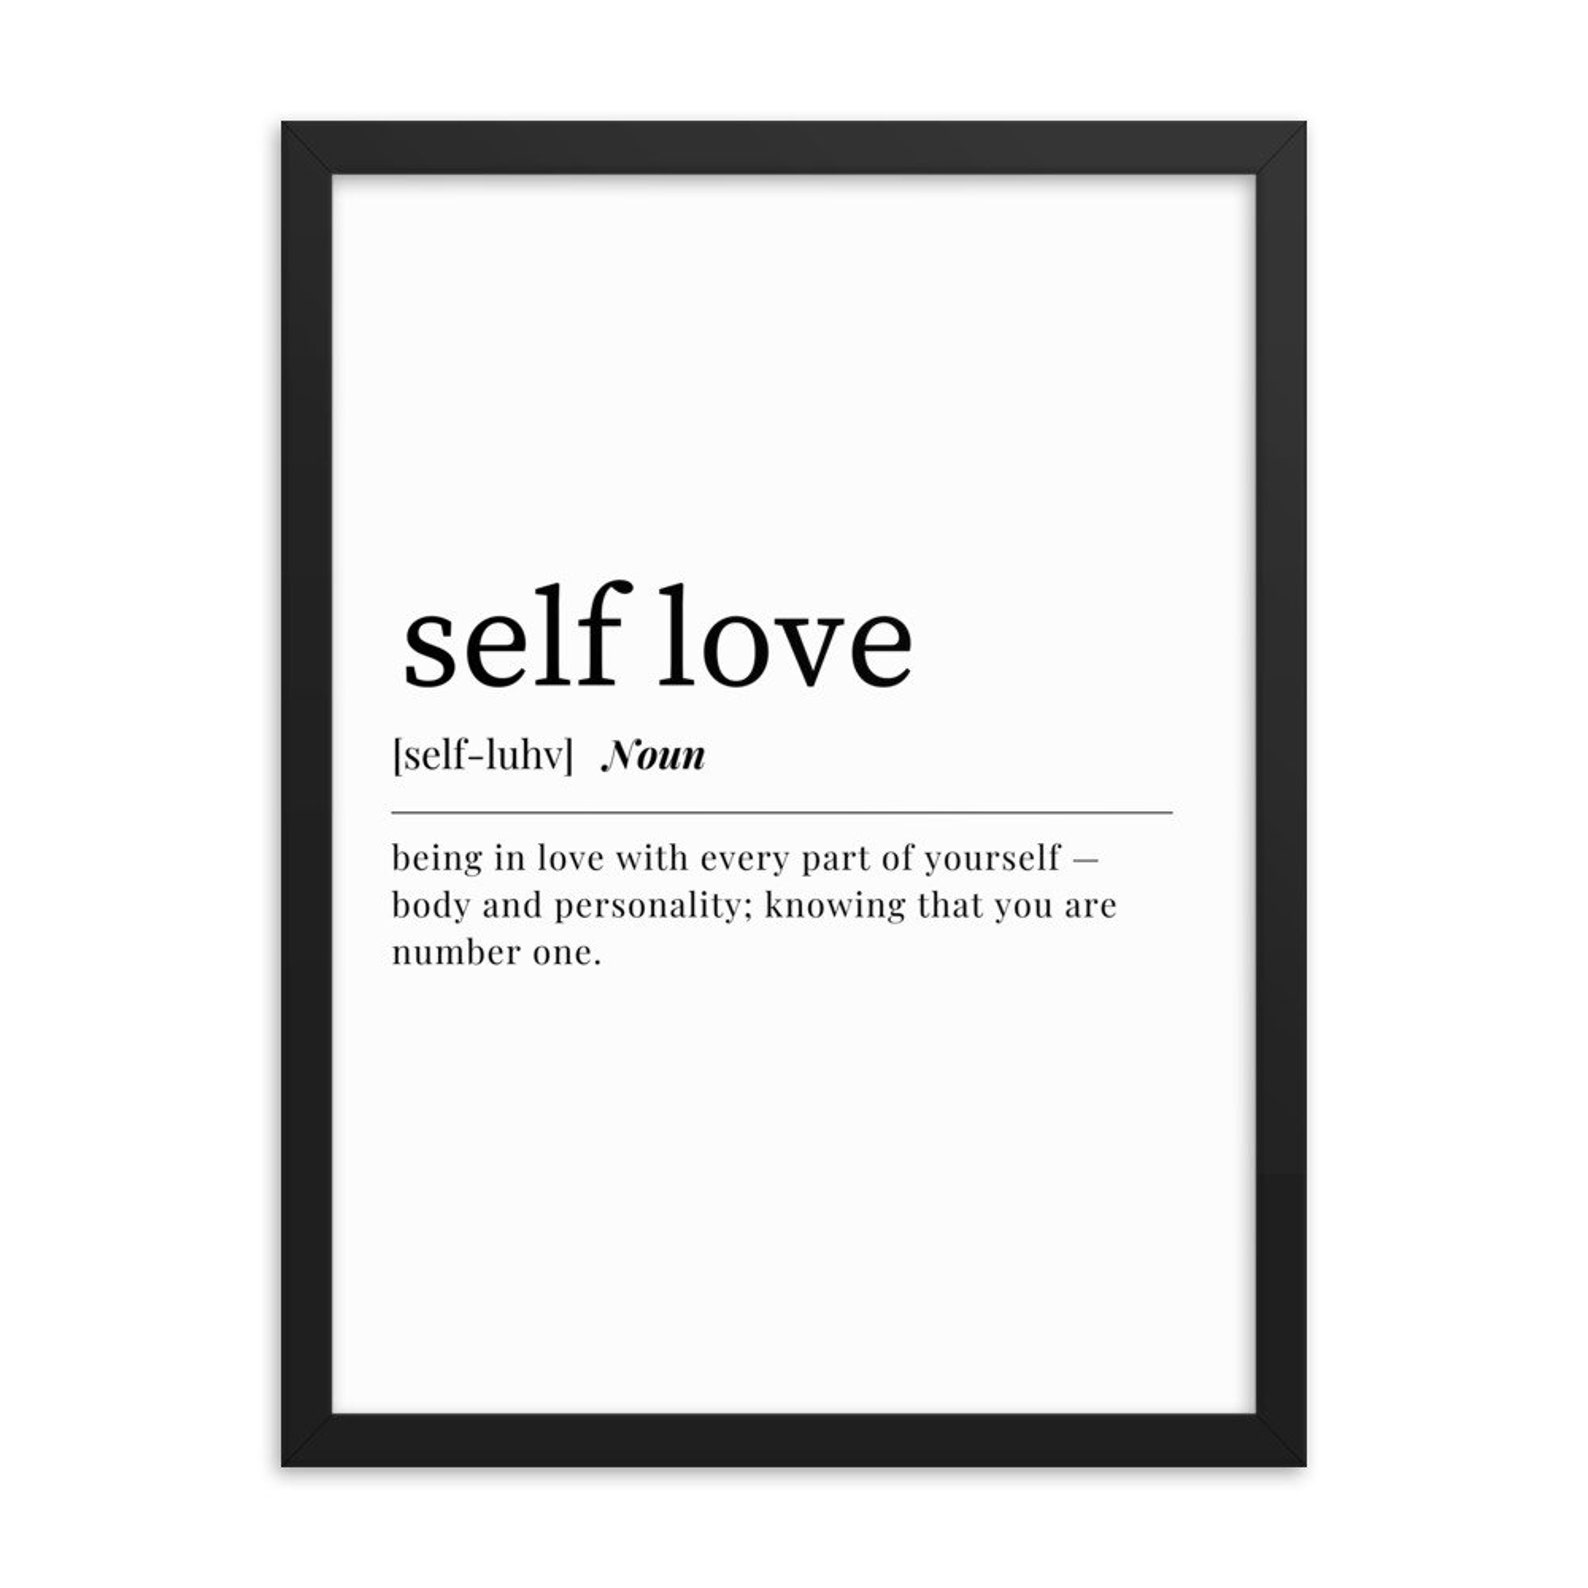 self love definition essay